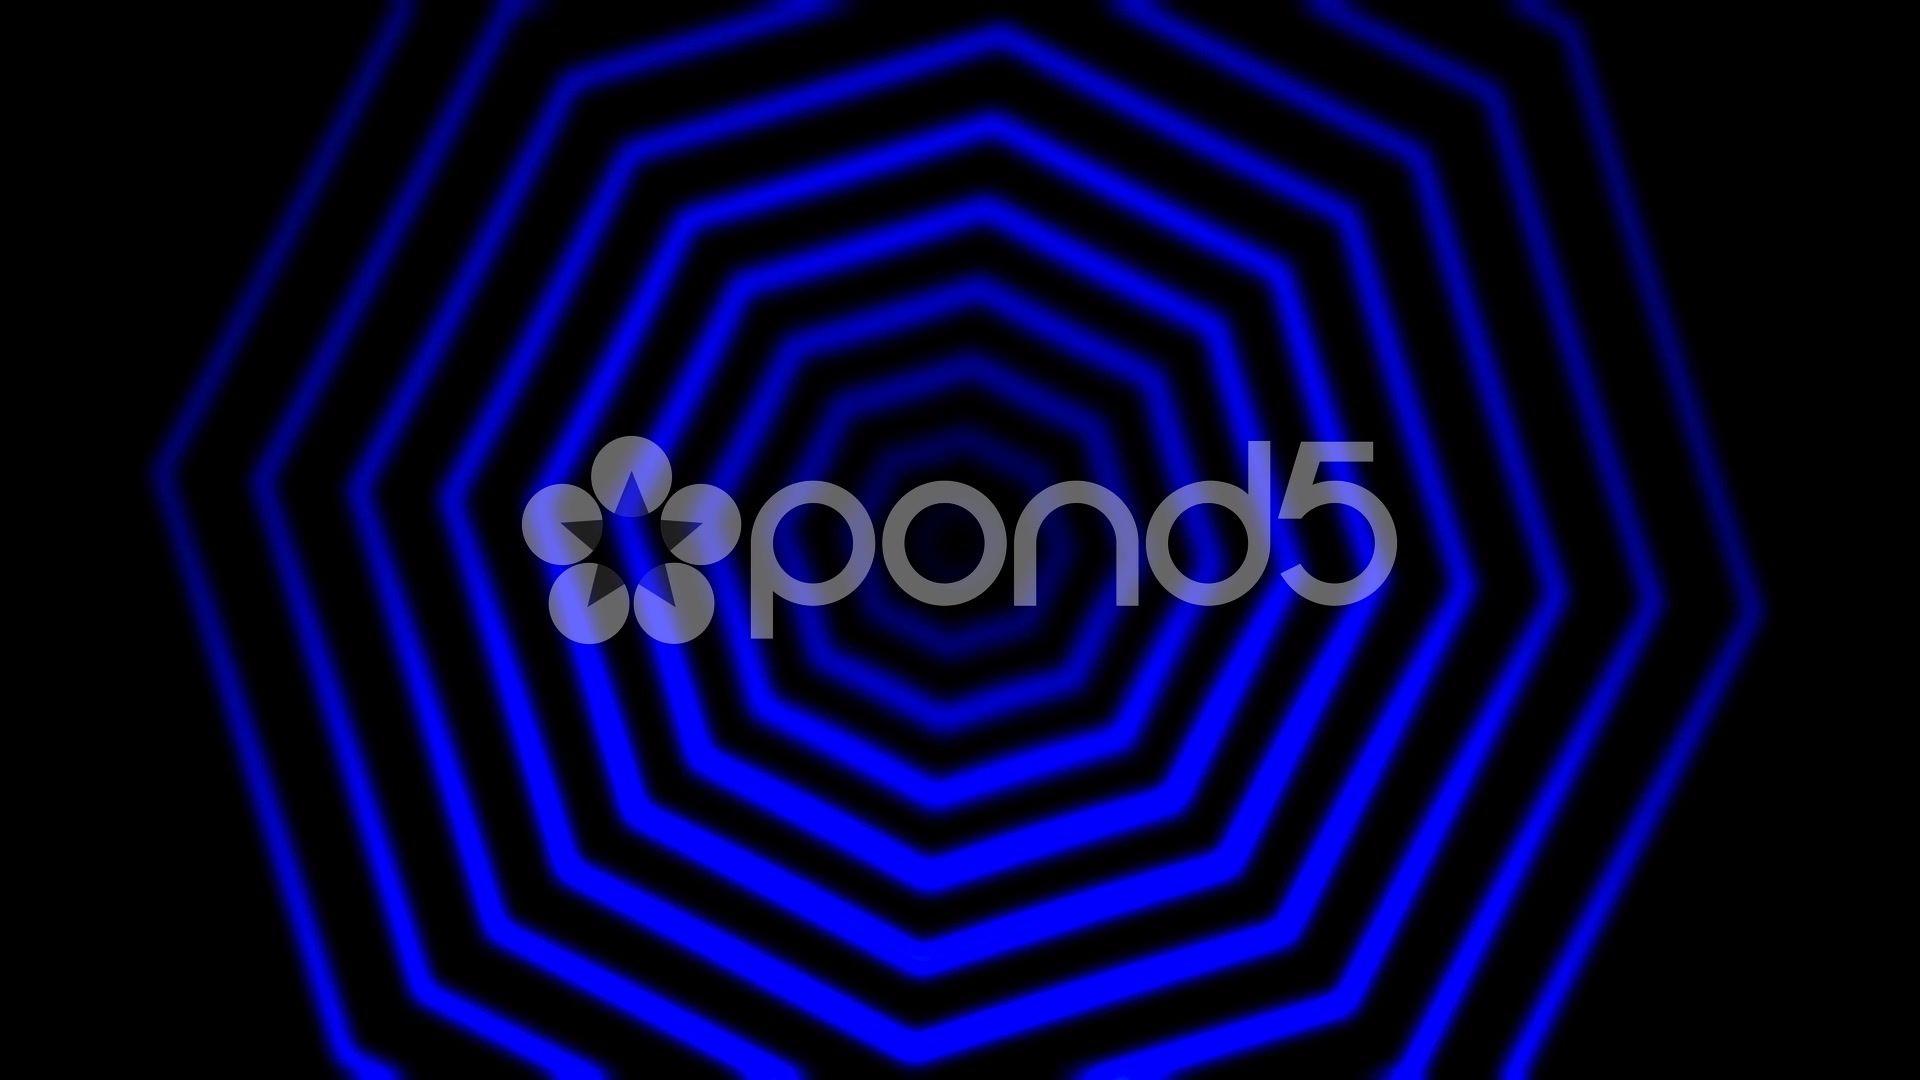 Blue Octagon Logo - Blue Octagon Tunnel ~ HD & 4K Stock Footage #53669068